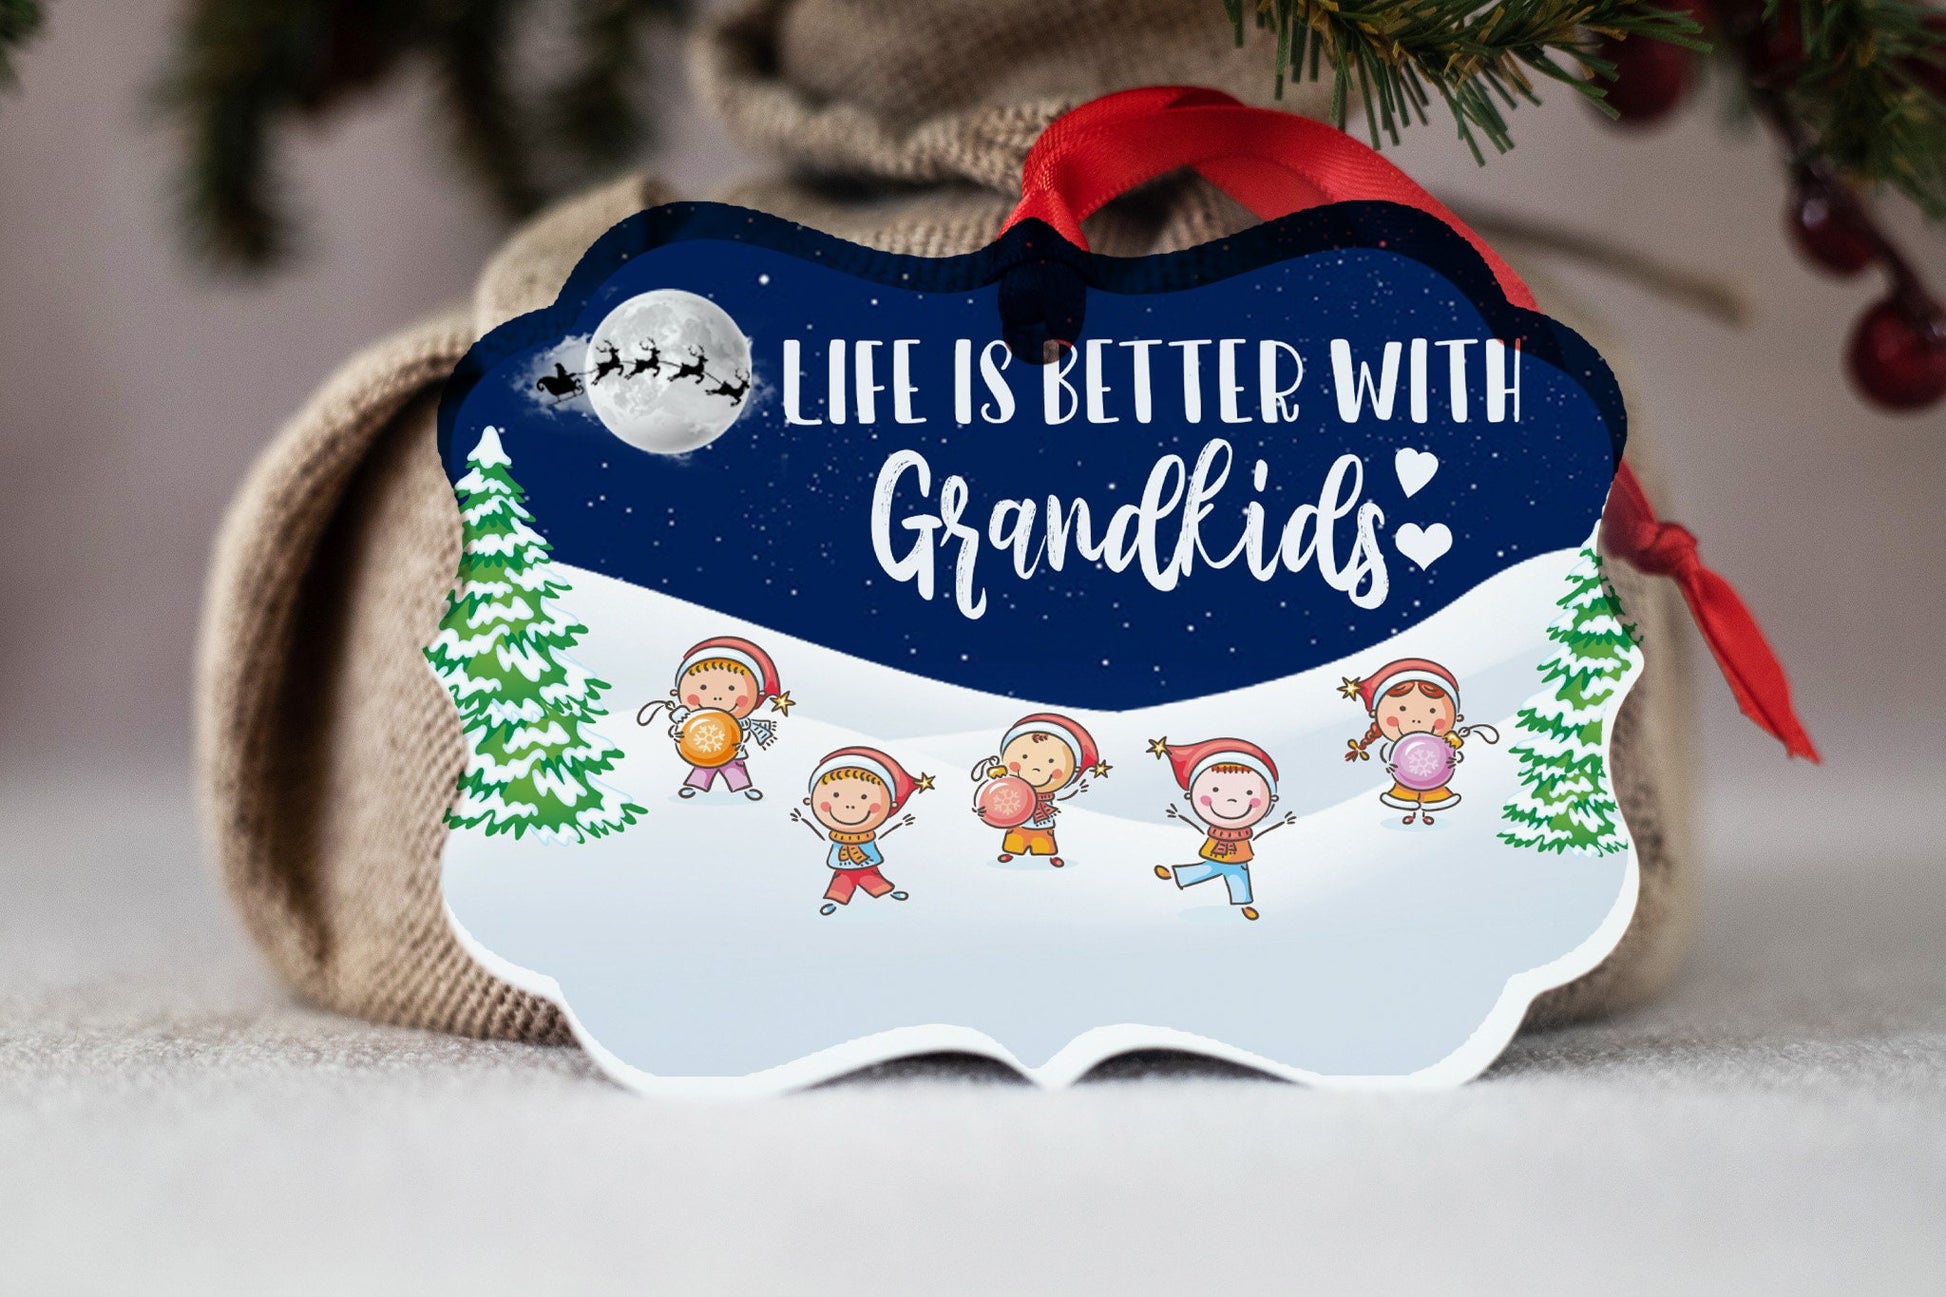 Personalized Ornament - Grandparent Christmas Ornament - Home Decor - Grandma Grandpa Gift - Grandparent Gift - Christmas Decor - Grandkids